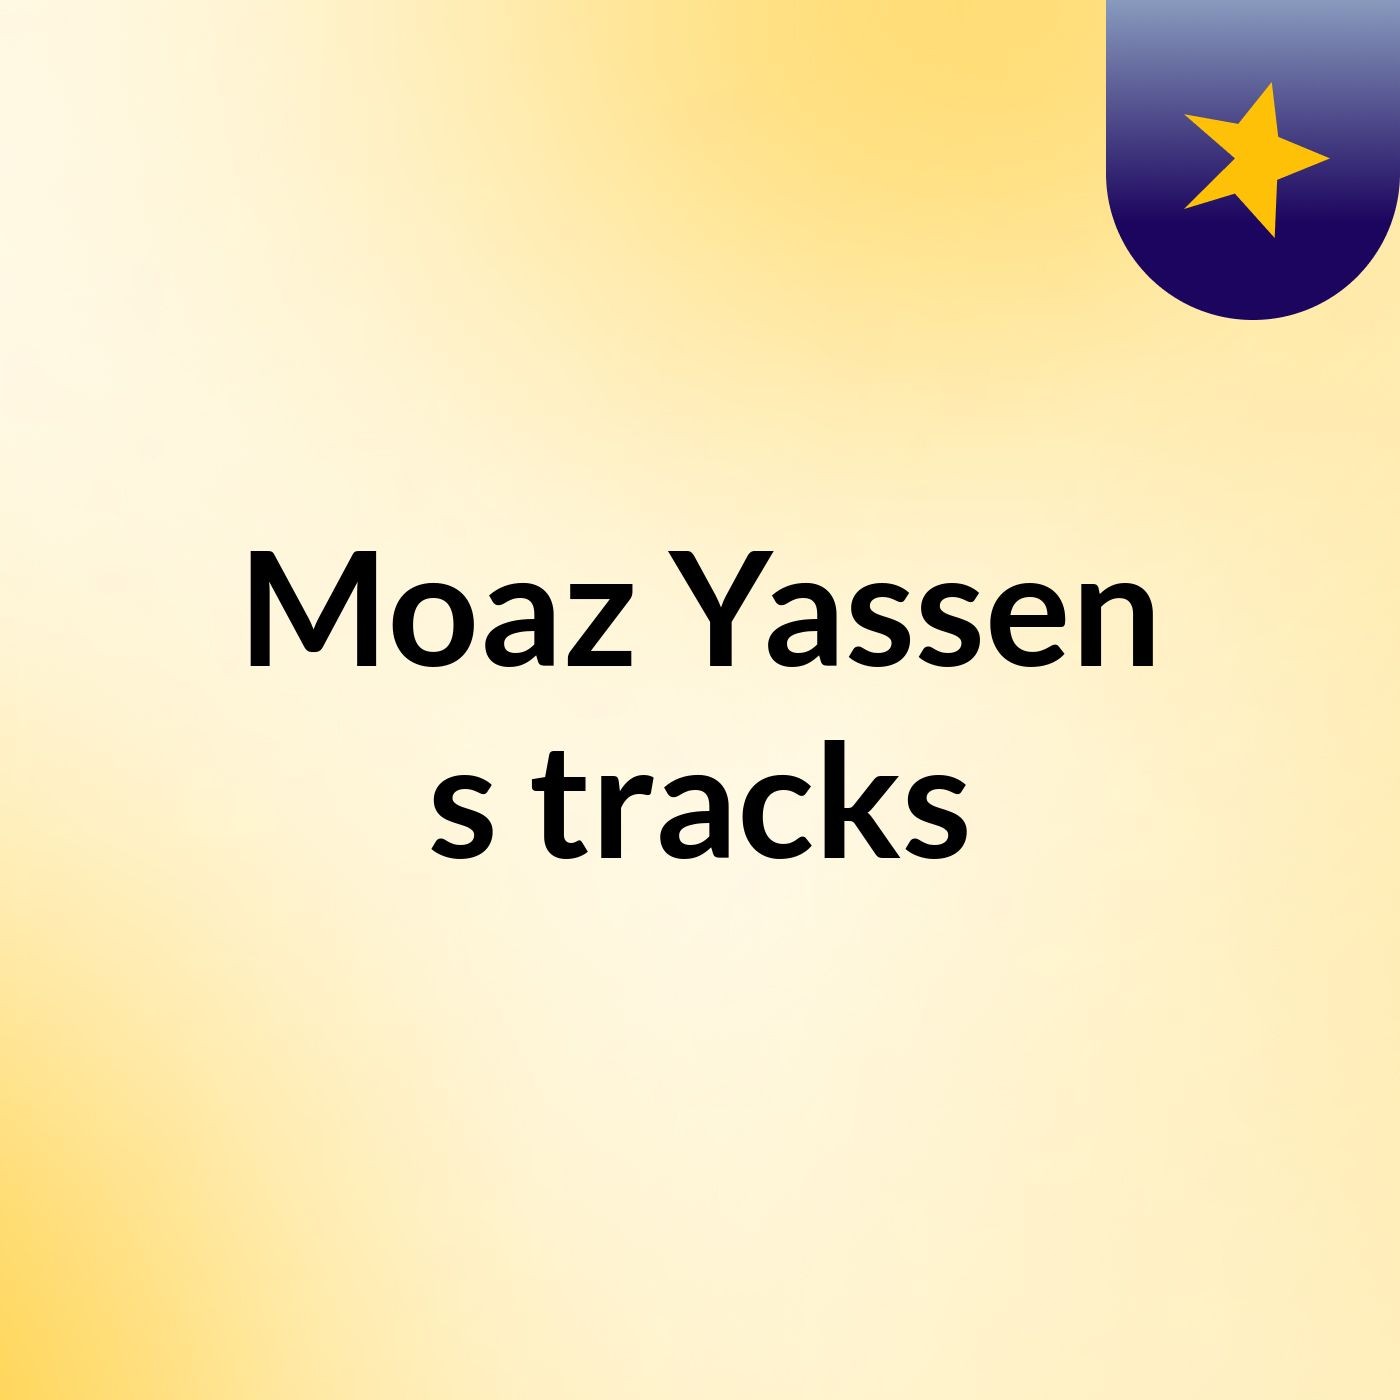 Moaz Yassen's tracks